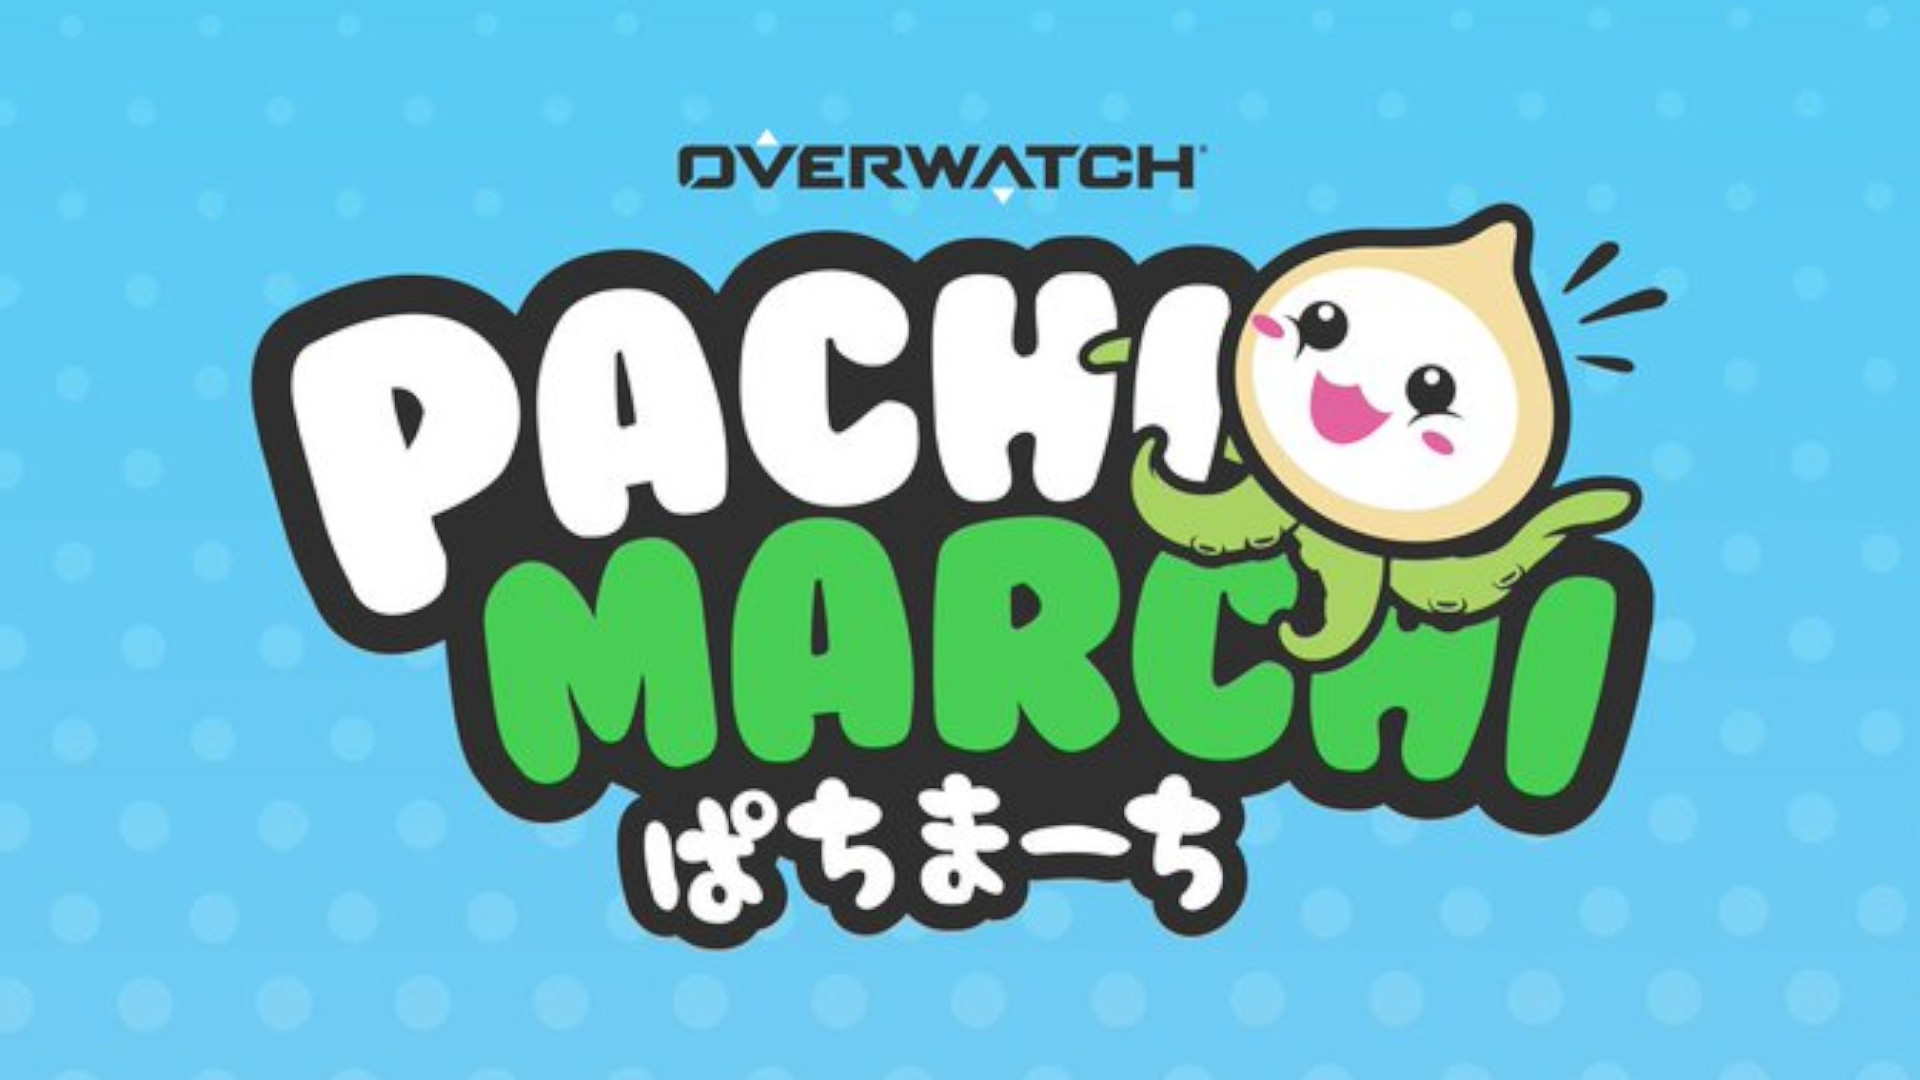 overwatch-pachimarchi-challenge-1